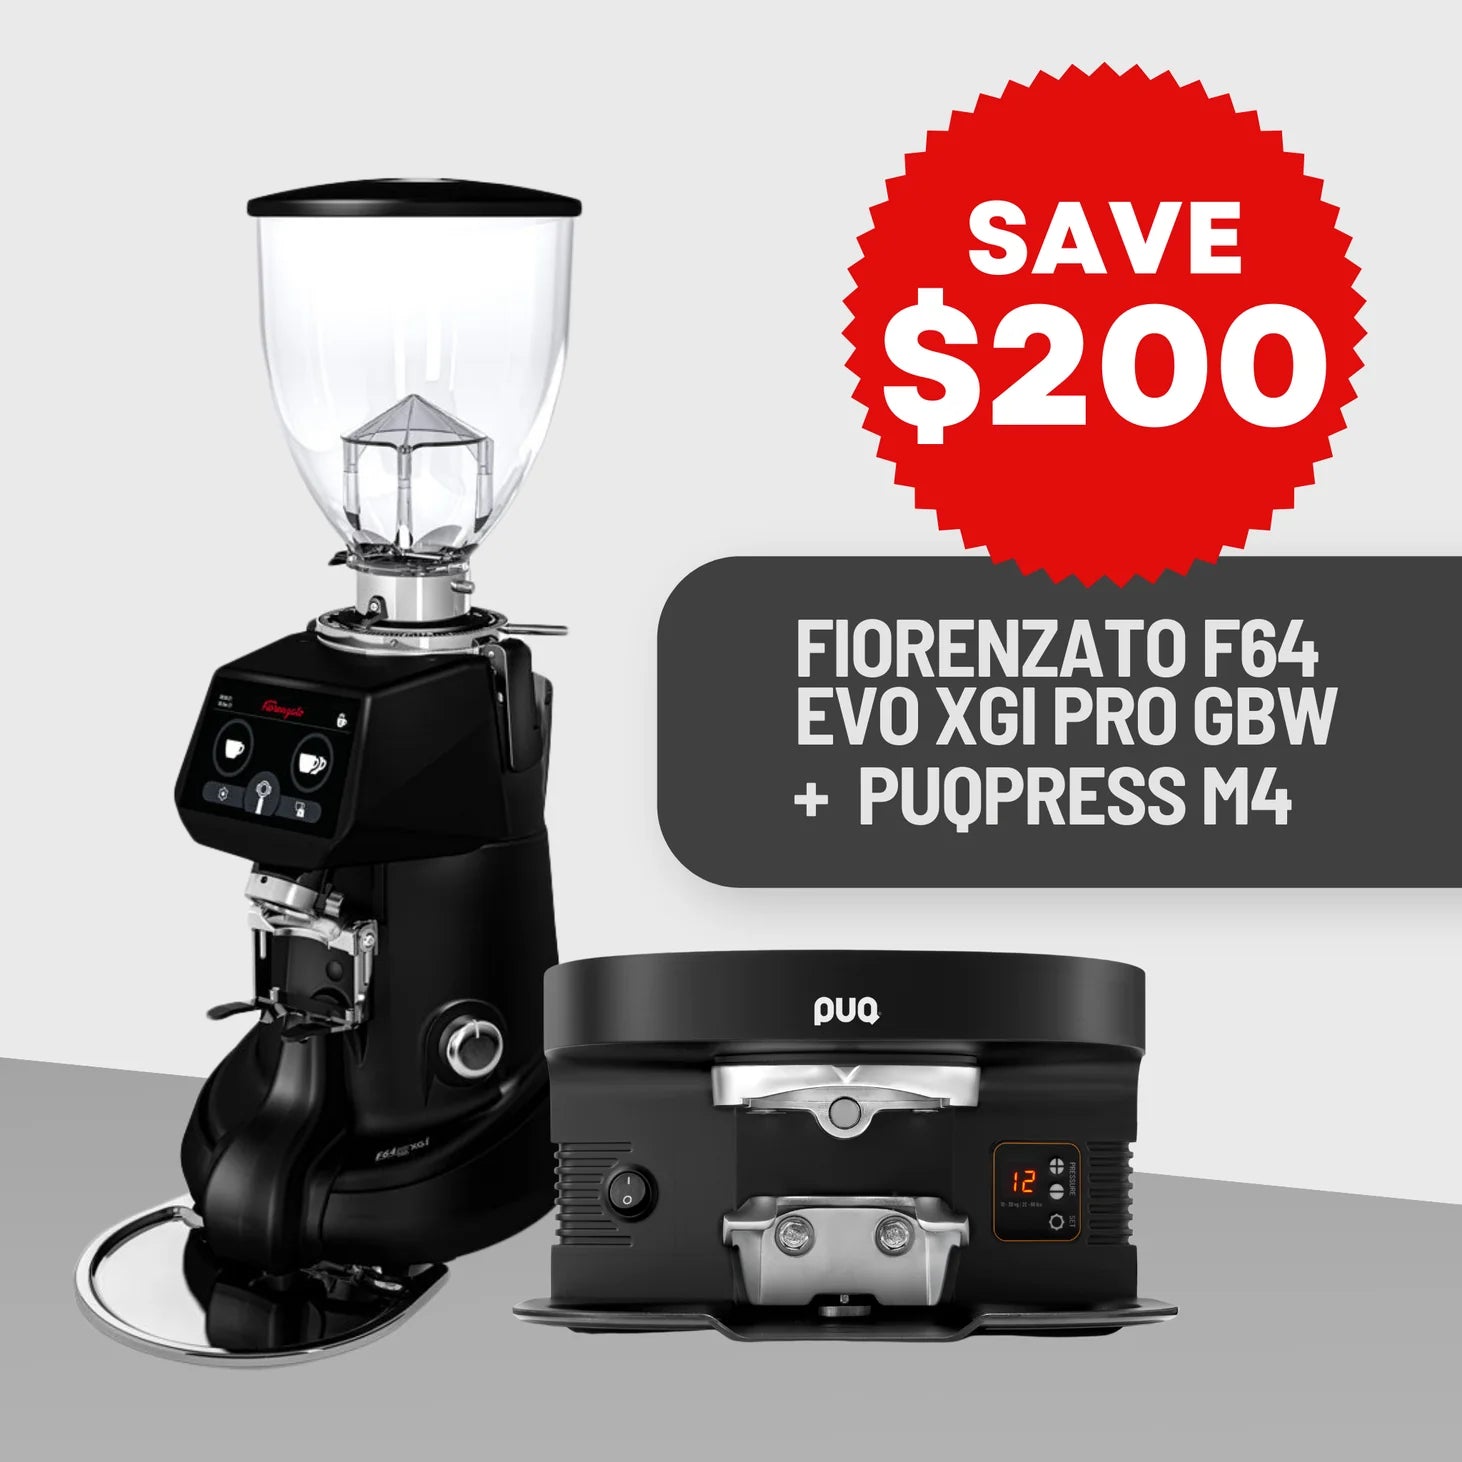 Bundle Deal: Fiorenzato F64 Evo XGI Pro Grind By Weight Grinder & Puqpress M4 Coffee Tamper